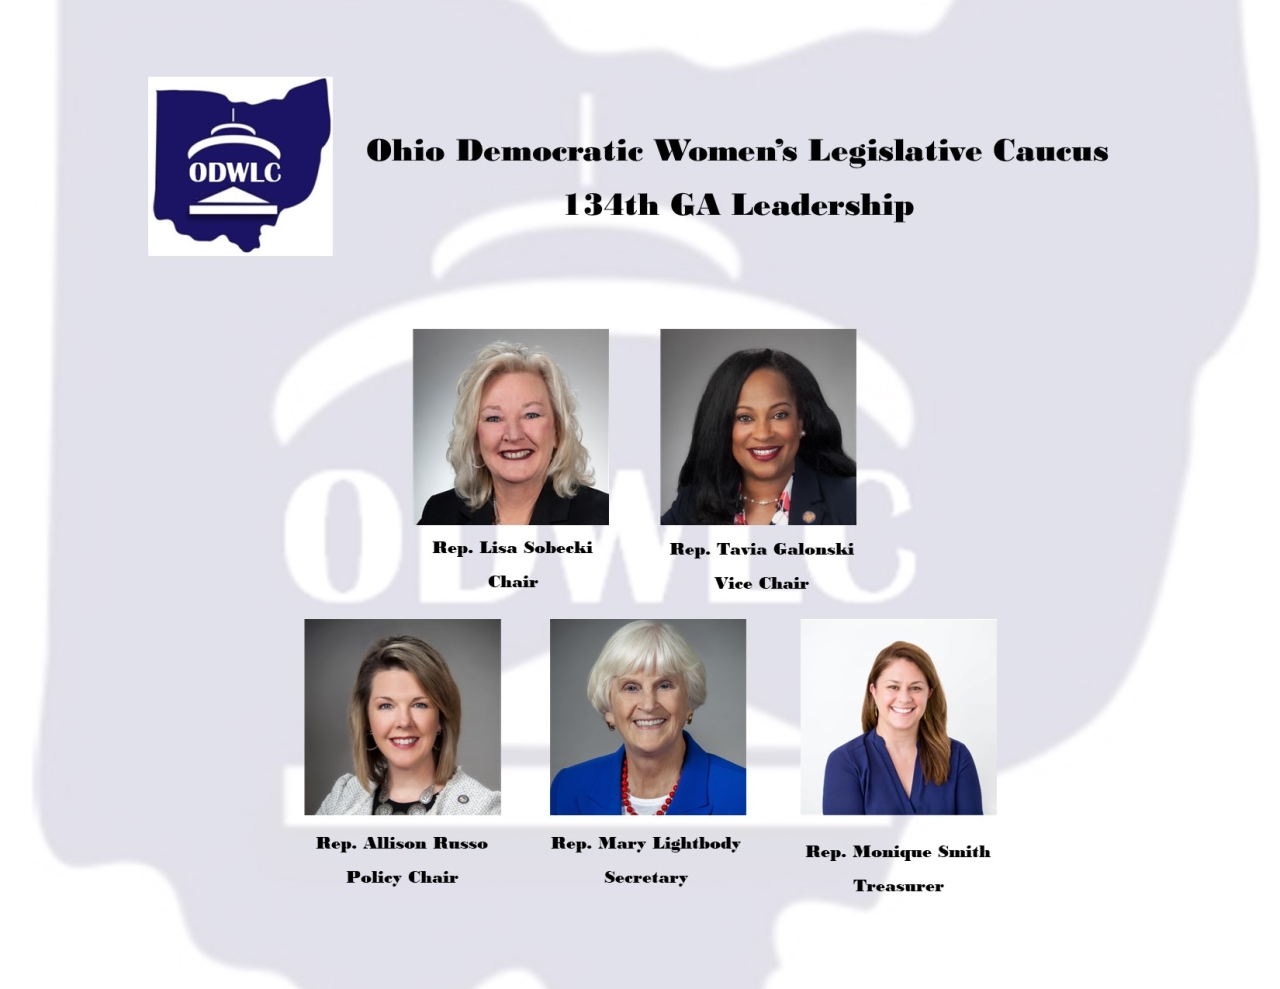 Women's Caucus Leadership Team for 134th GA Selected